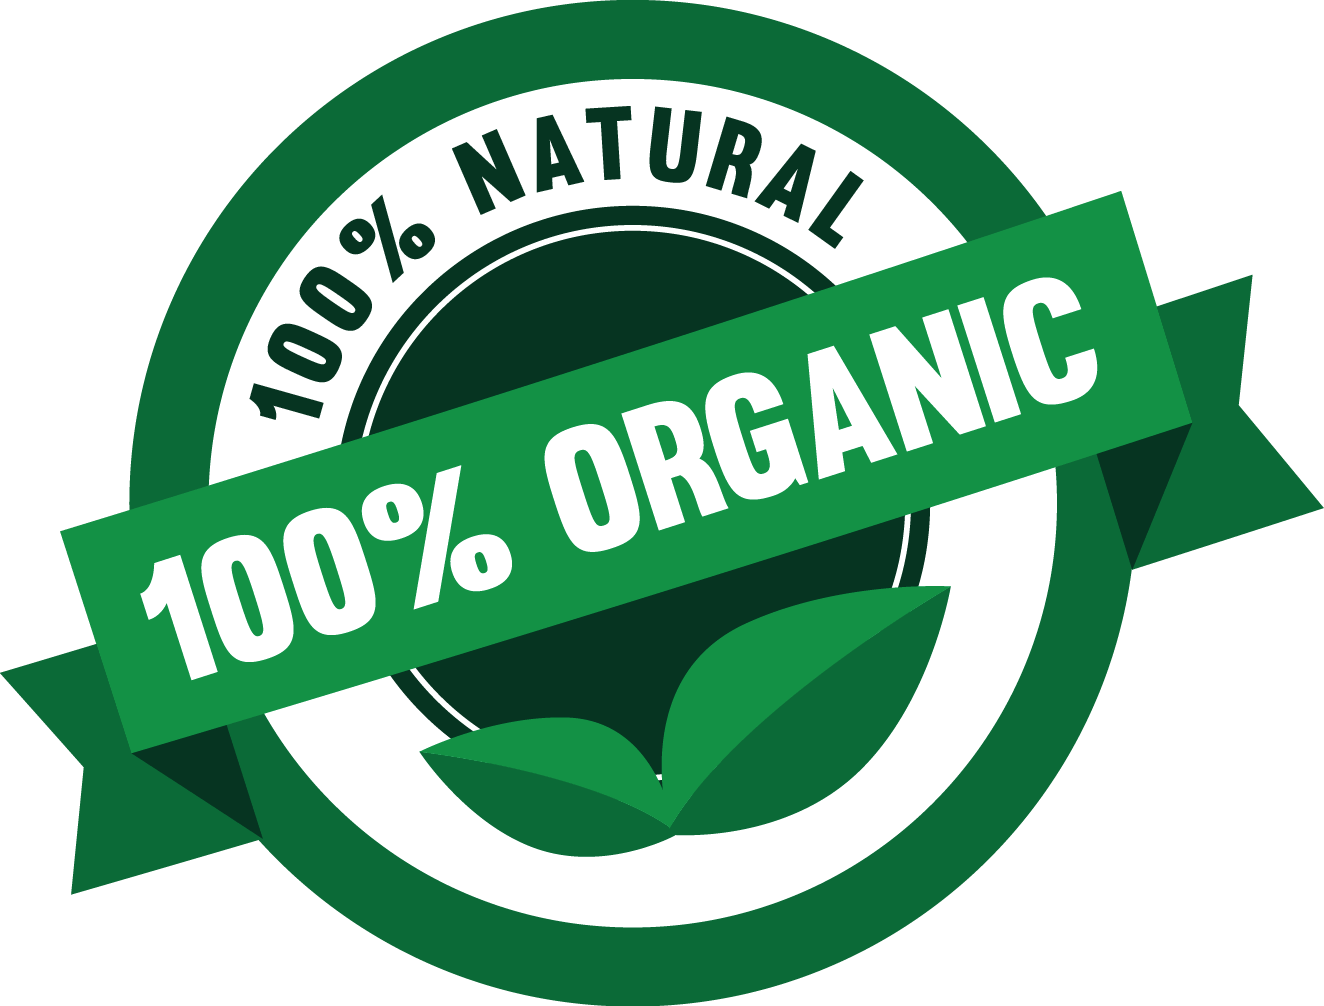 100% Organic natural logo png #41043